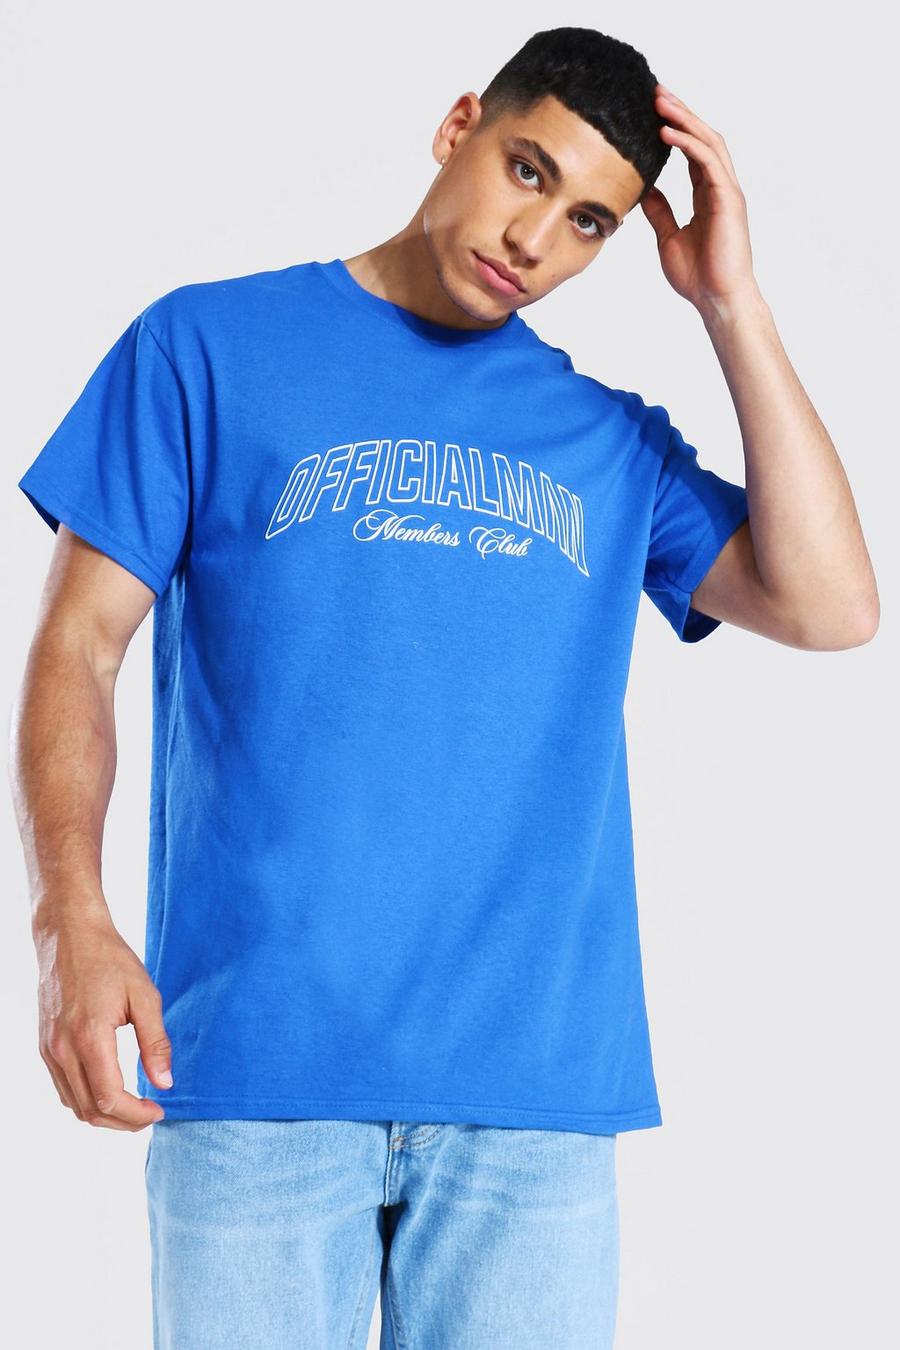 Camiseta MAN Official Members Club, Cobalt azul image number 1